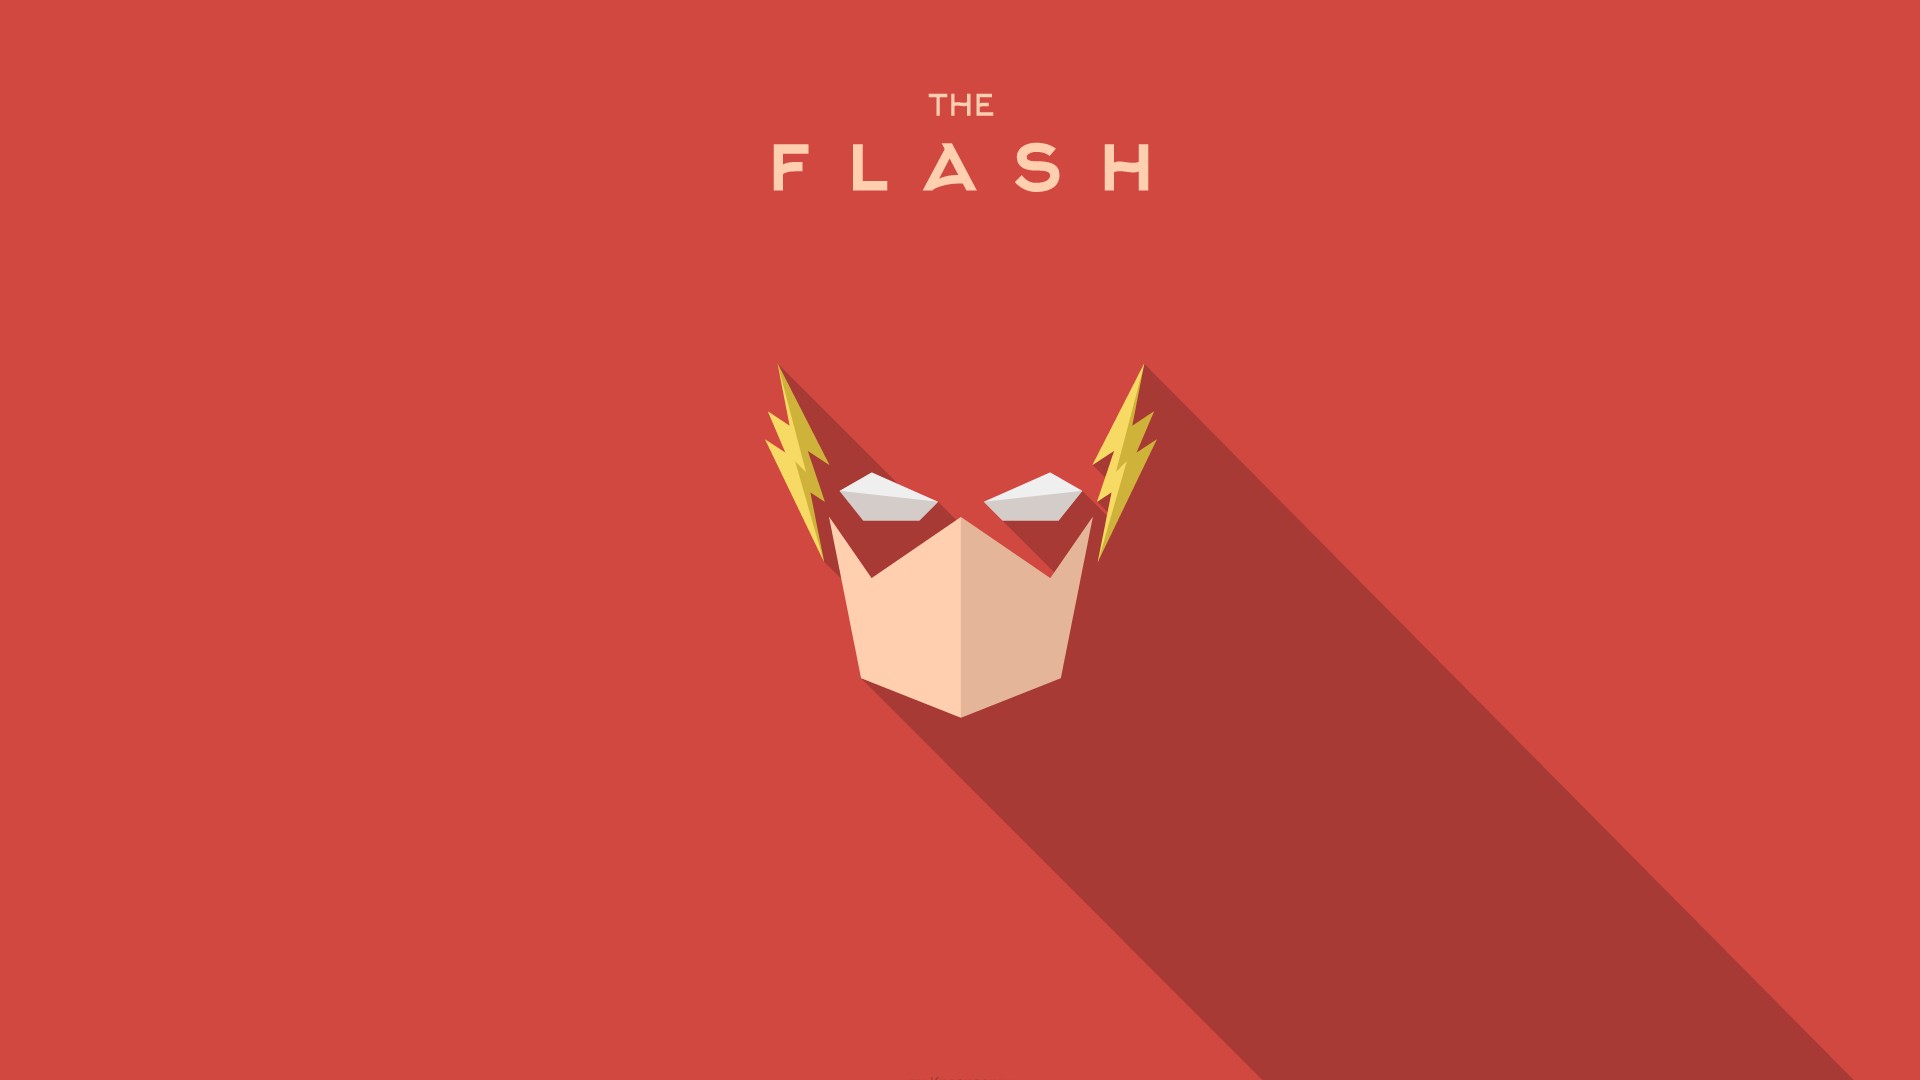 Flash, Heroes, The Flash, Red, Superhero Wallpaper